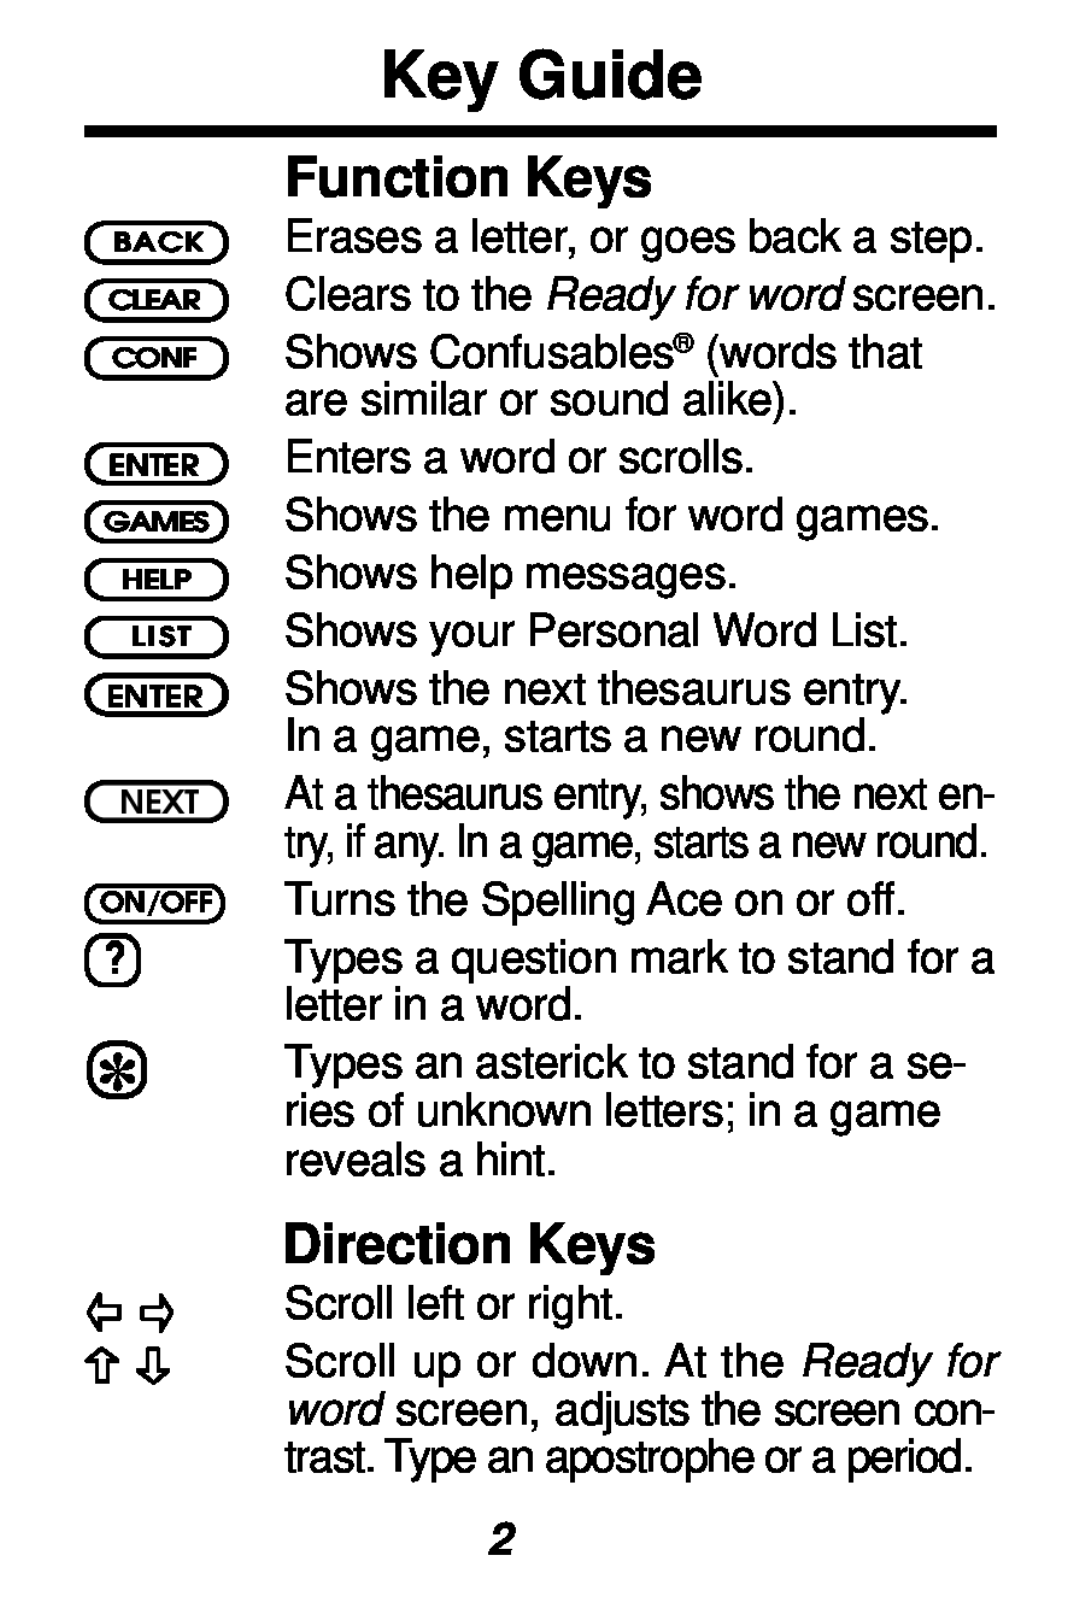 Franklin SA-98 manual Key Guide, Function Keys, Direction Keys 